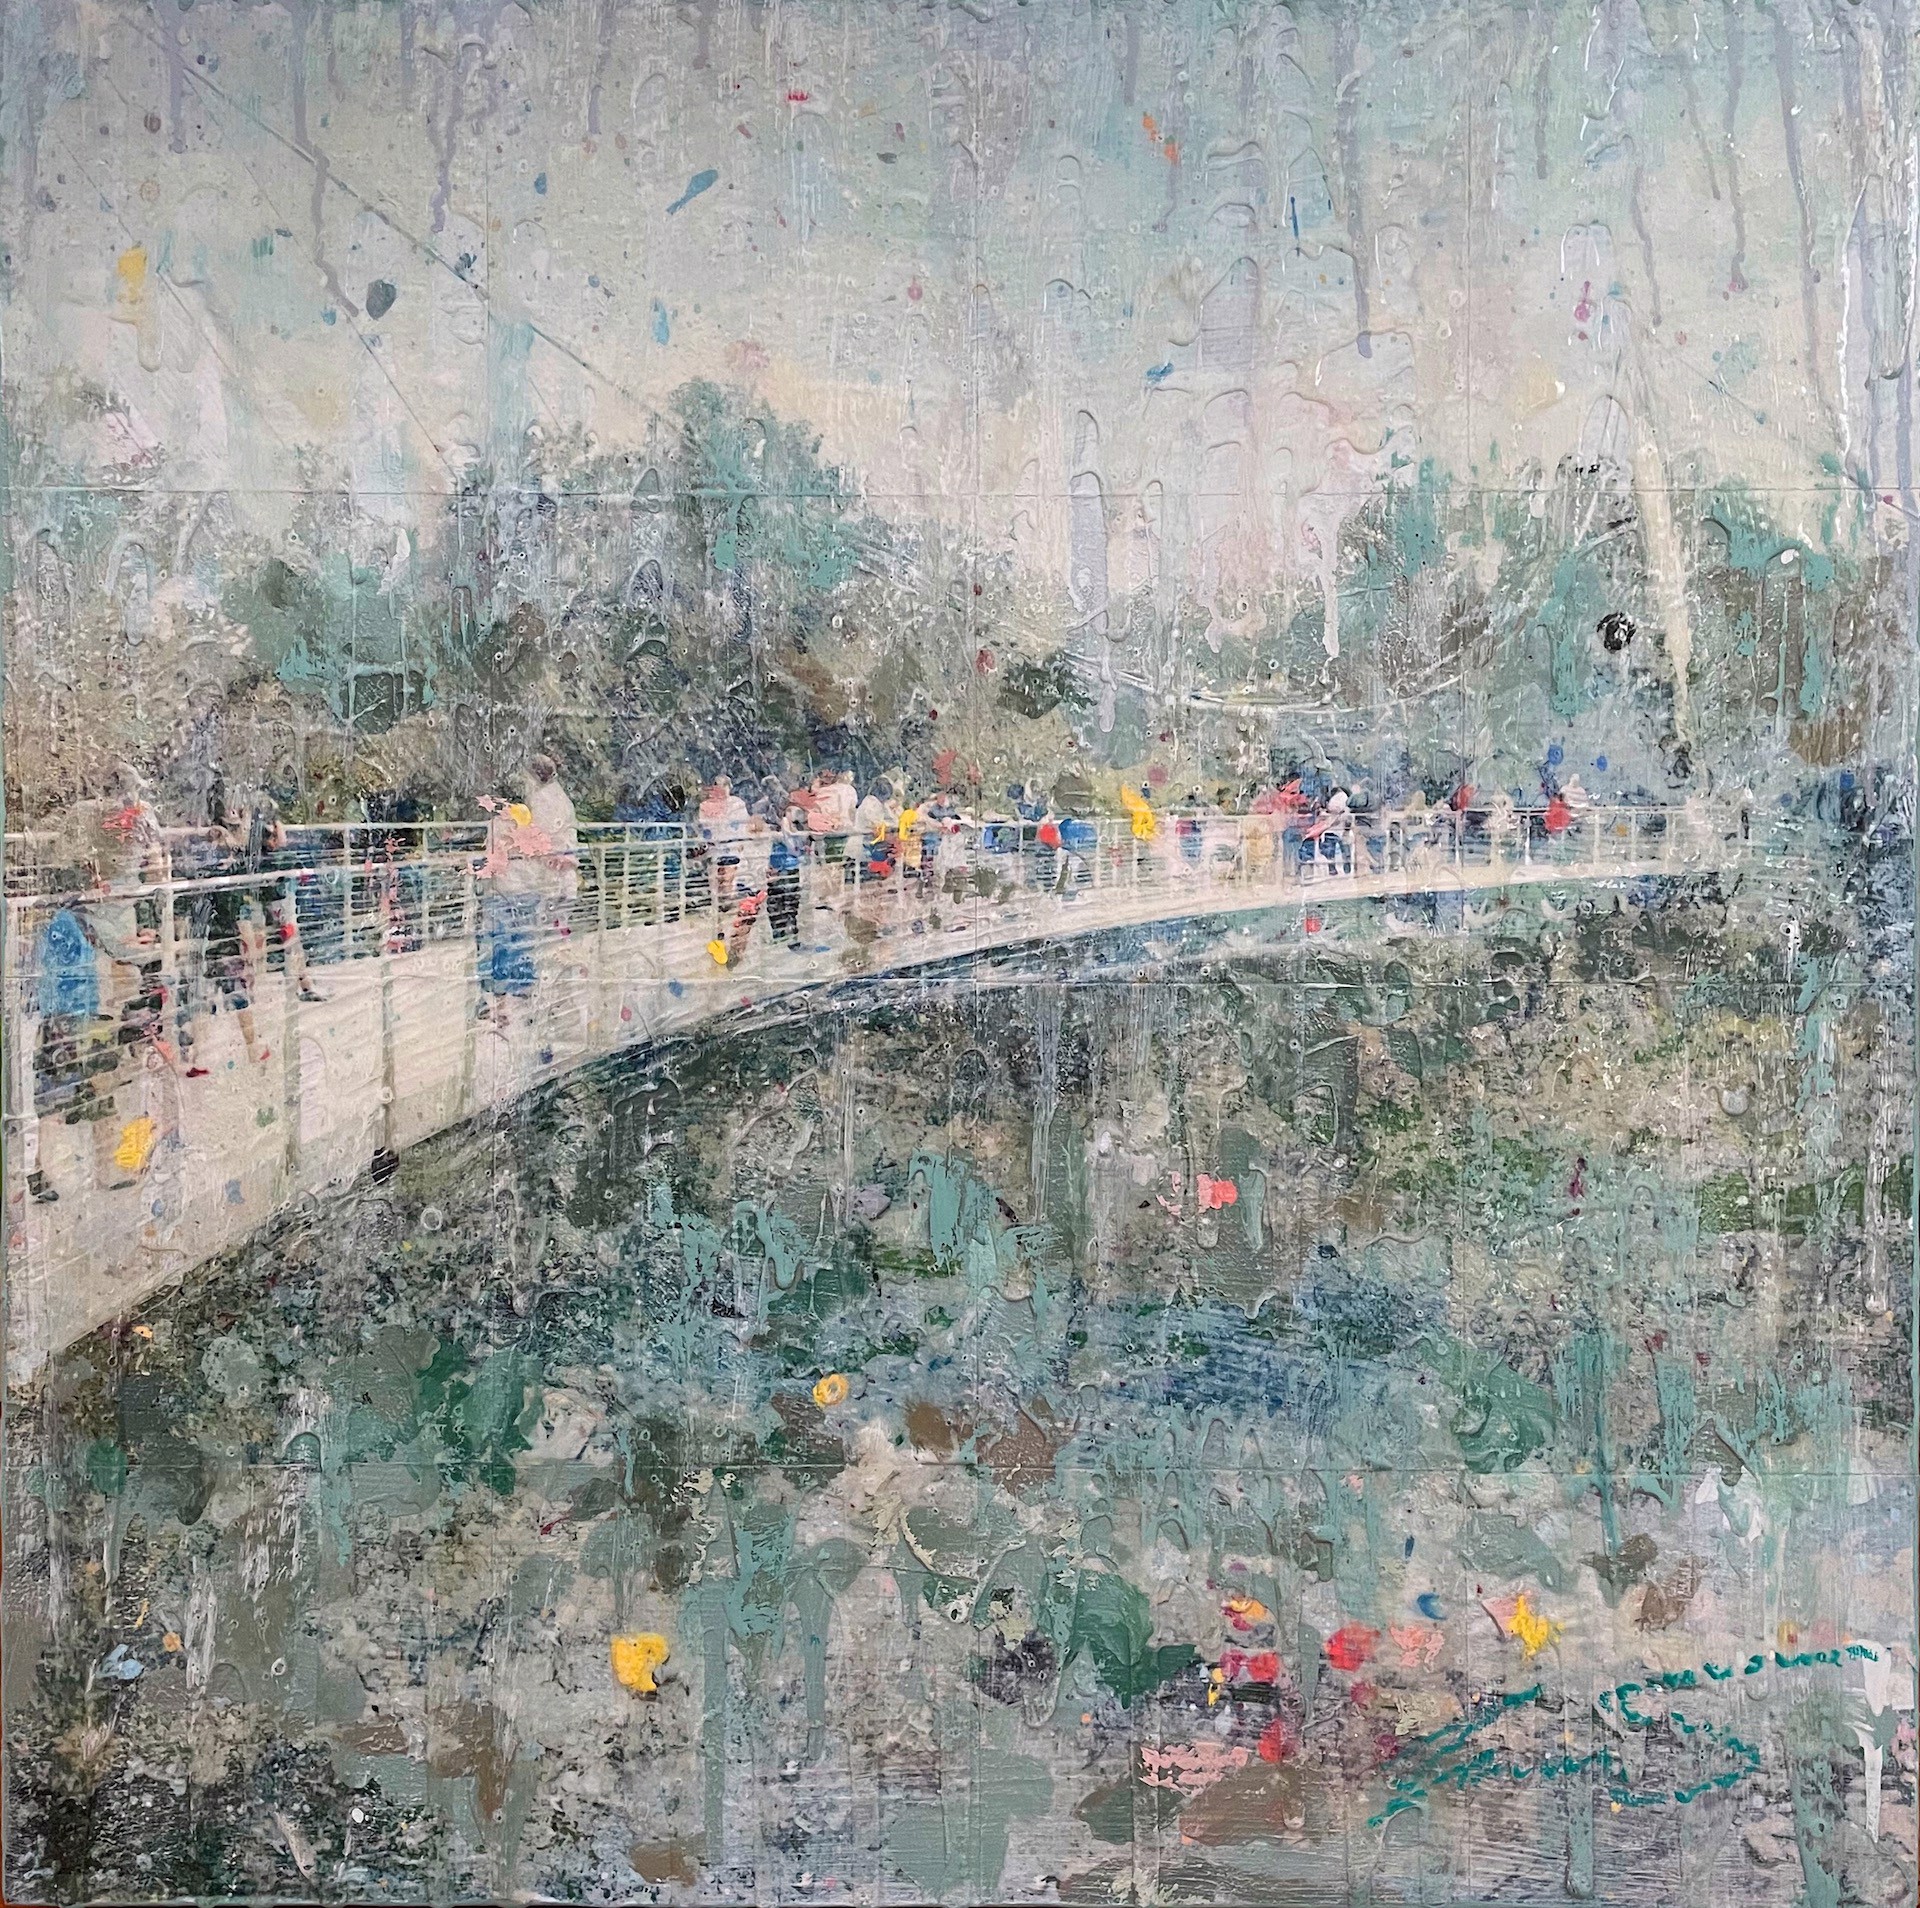 The Bridge by Jon Davenport